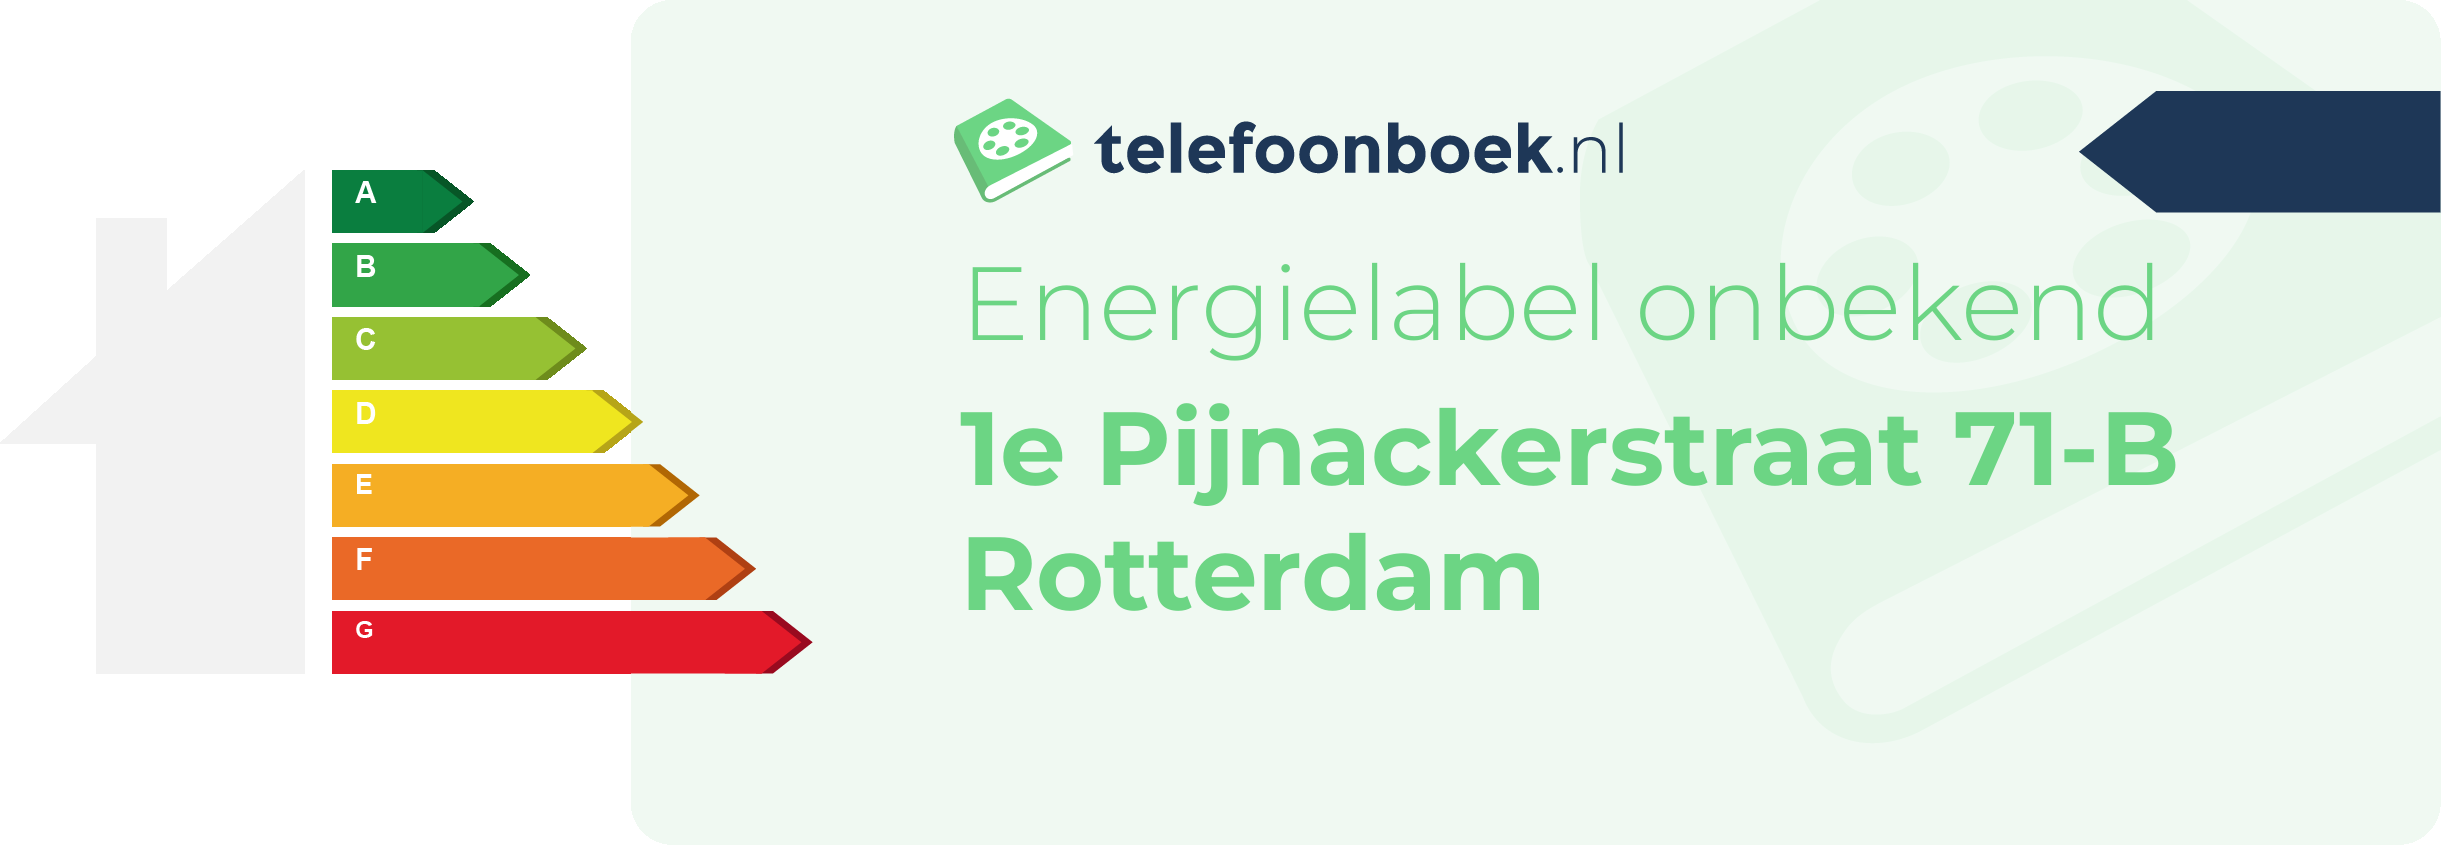 Energielabel 1e Pijnackerstraat 71-B Rotterdam